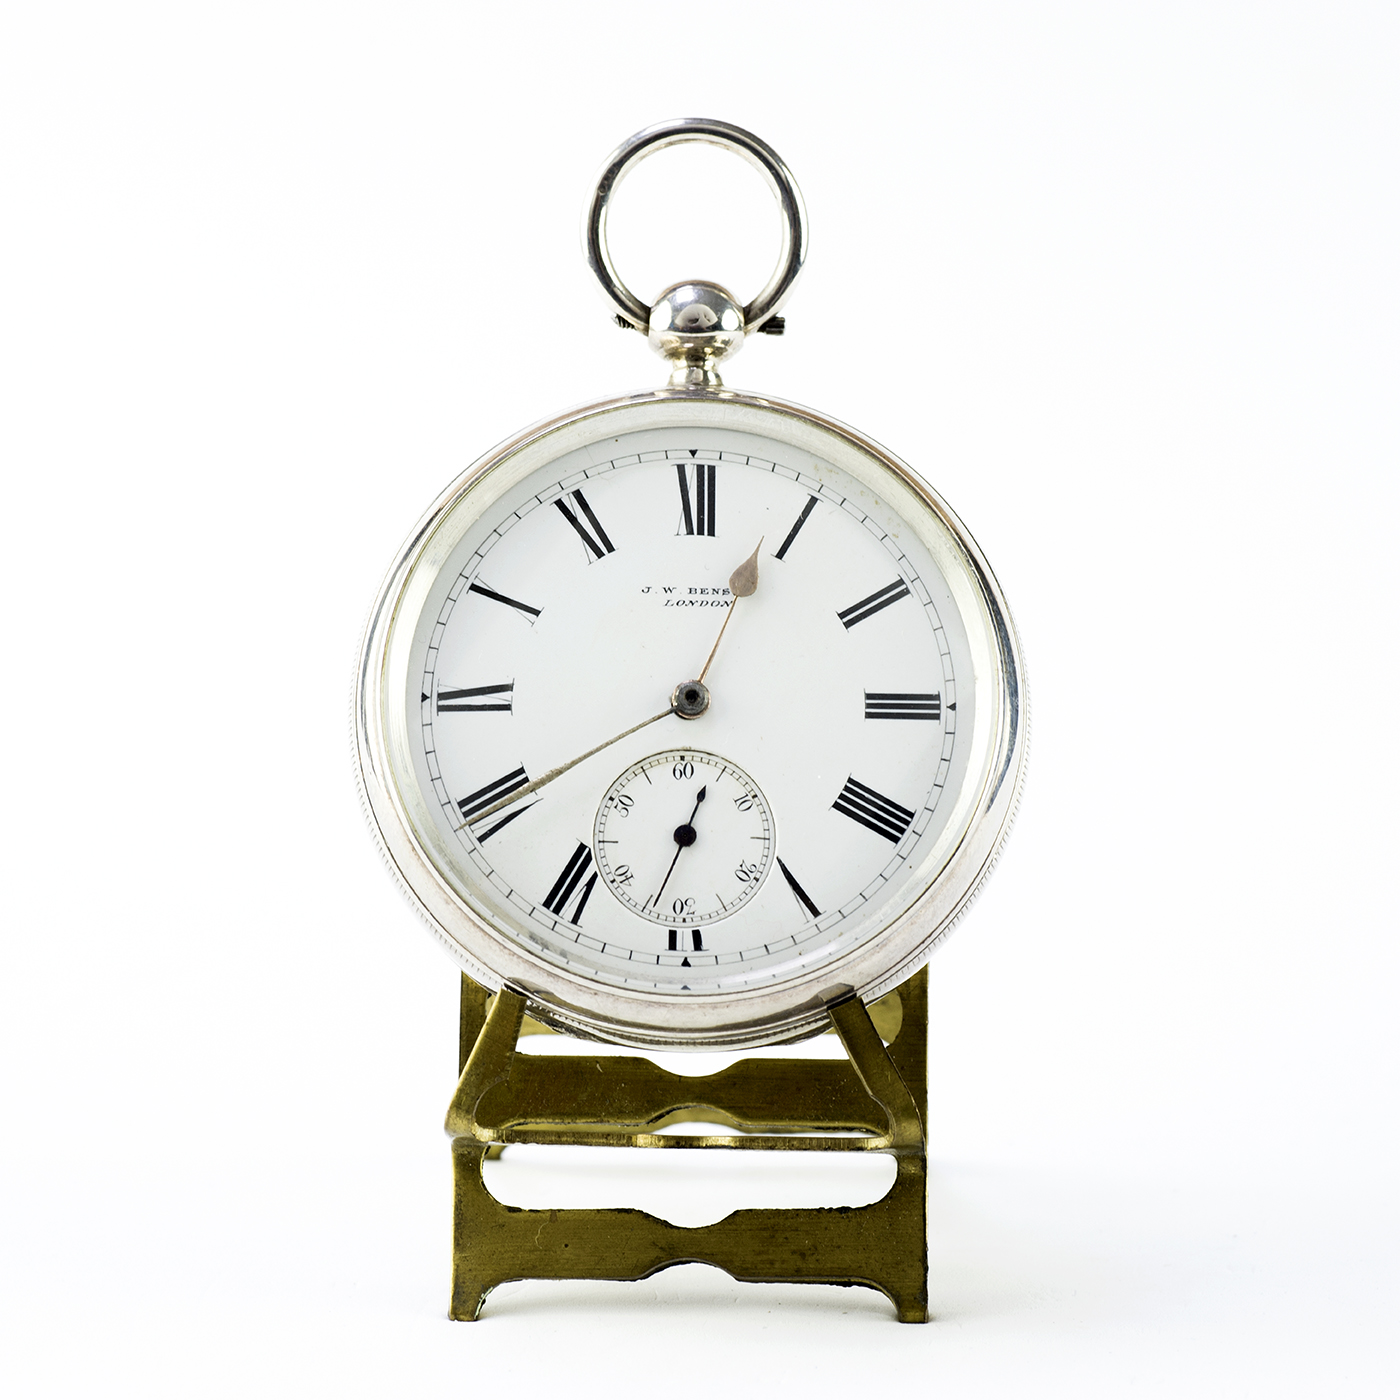 J.W. BENSON (Londres). Reloj de bolsillo, lepine. Londres, 1885.